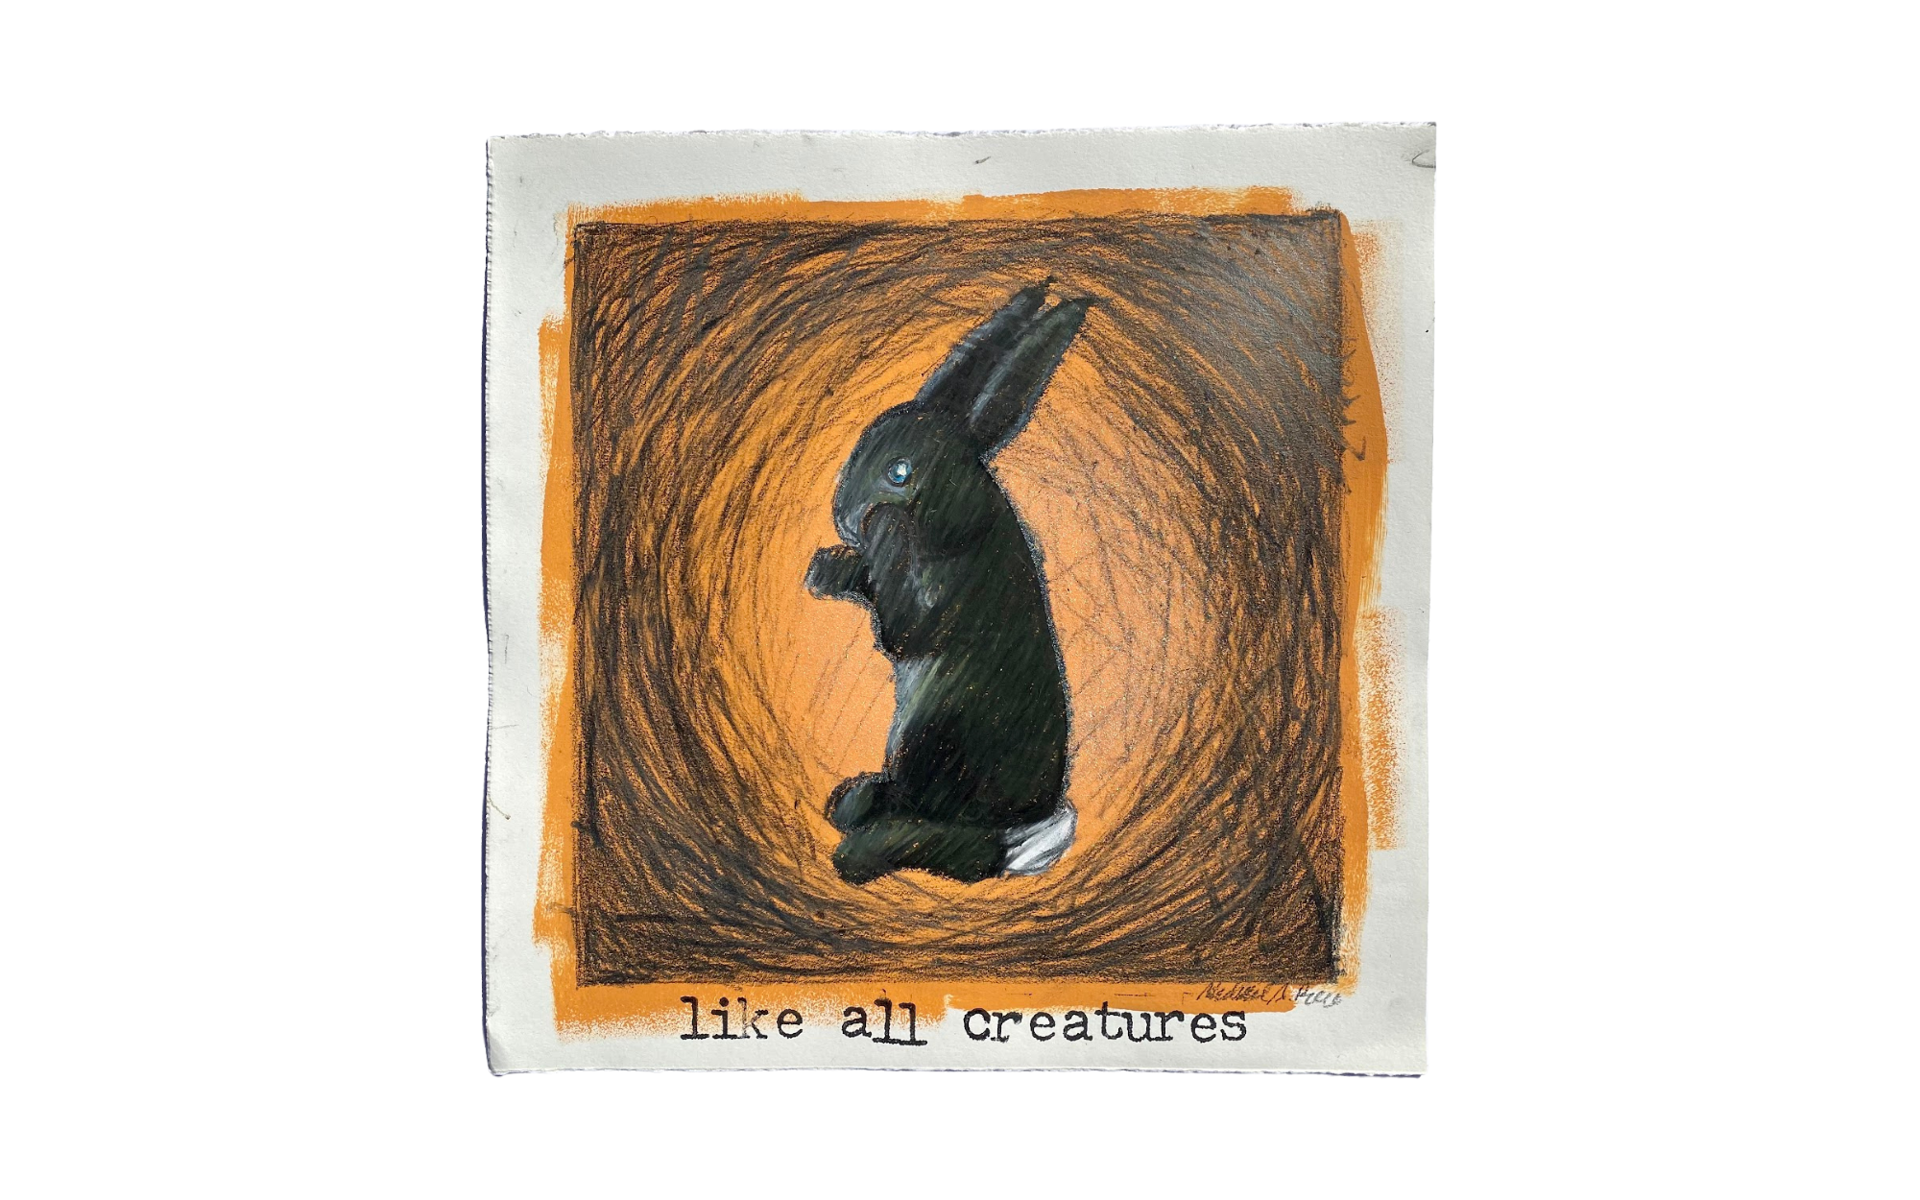 like all creatures (black rabbit) - U RAB B01 by MICHAEL A. PIERCE